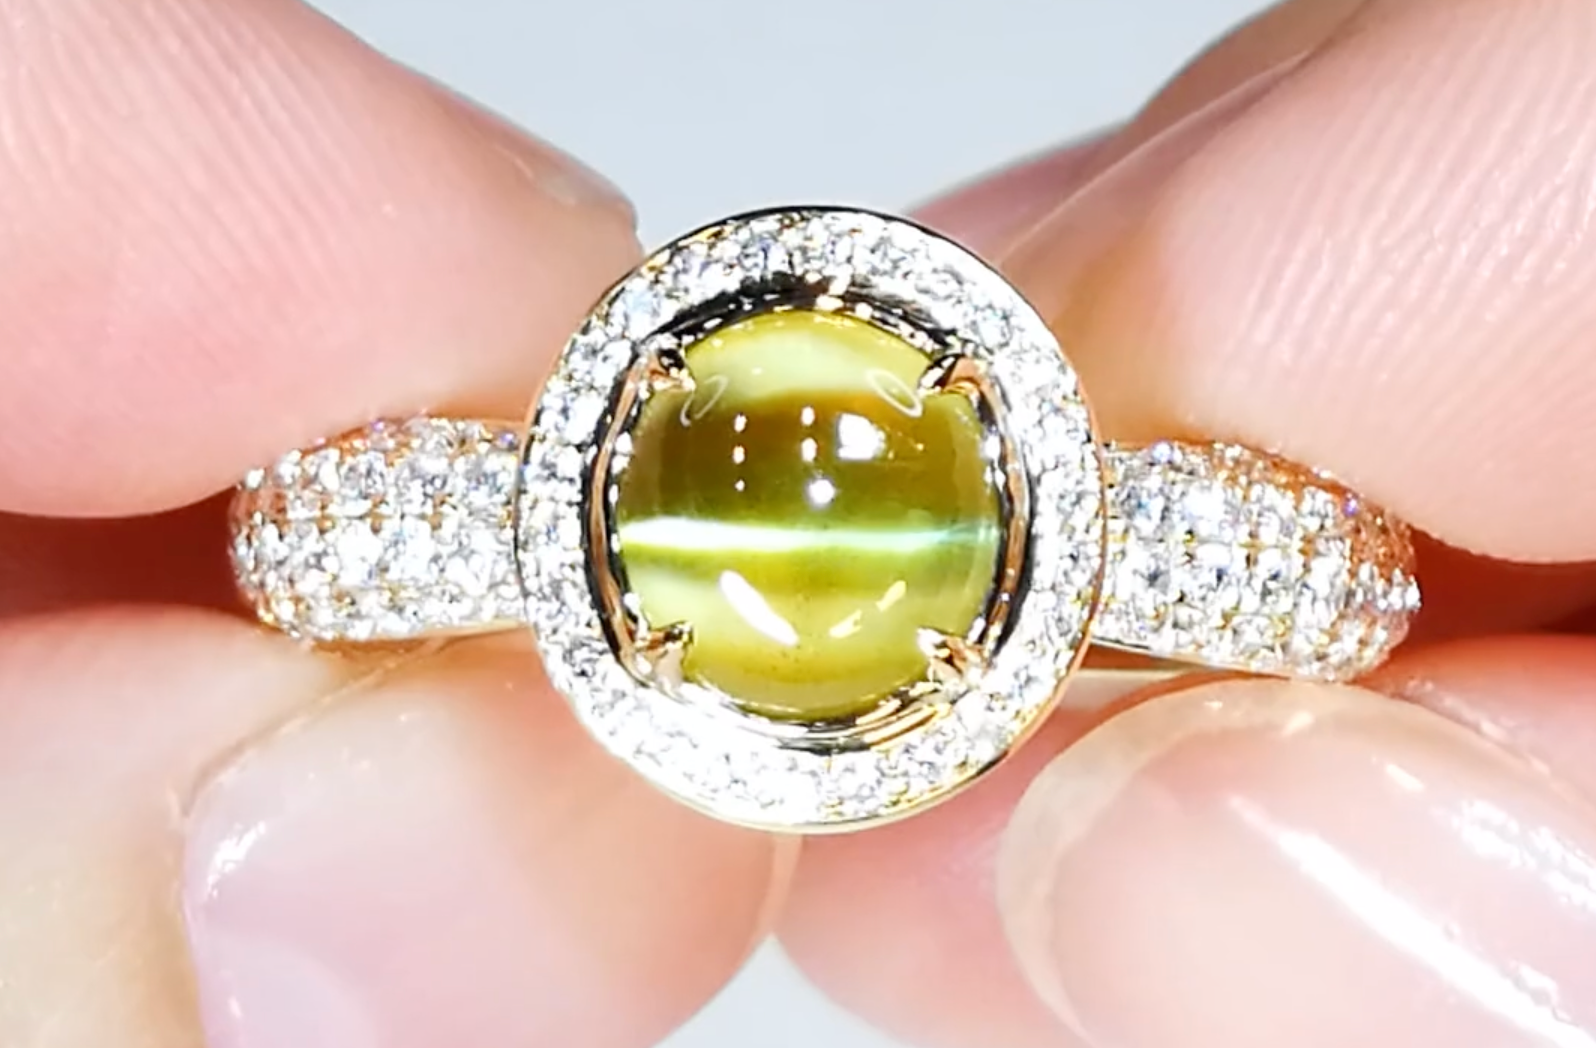 Ceylon Milk And Honey Cat Eye Chrysoberyl Ring with D Flawless Diamonds set in 18K Yellow Gold